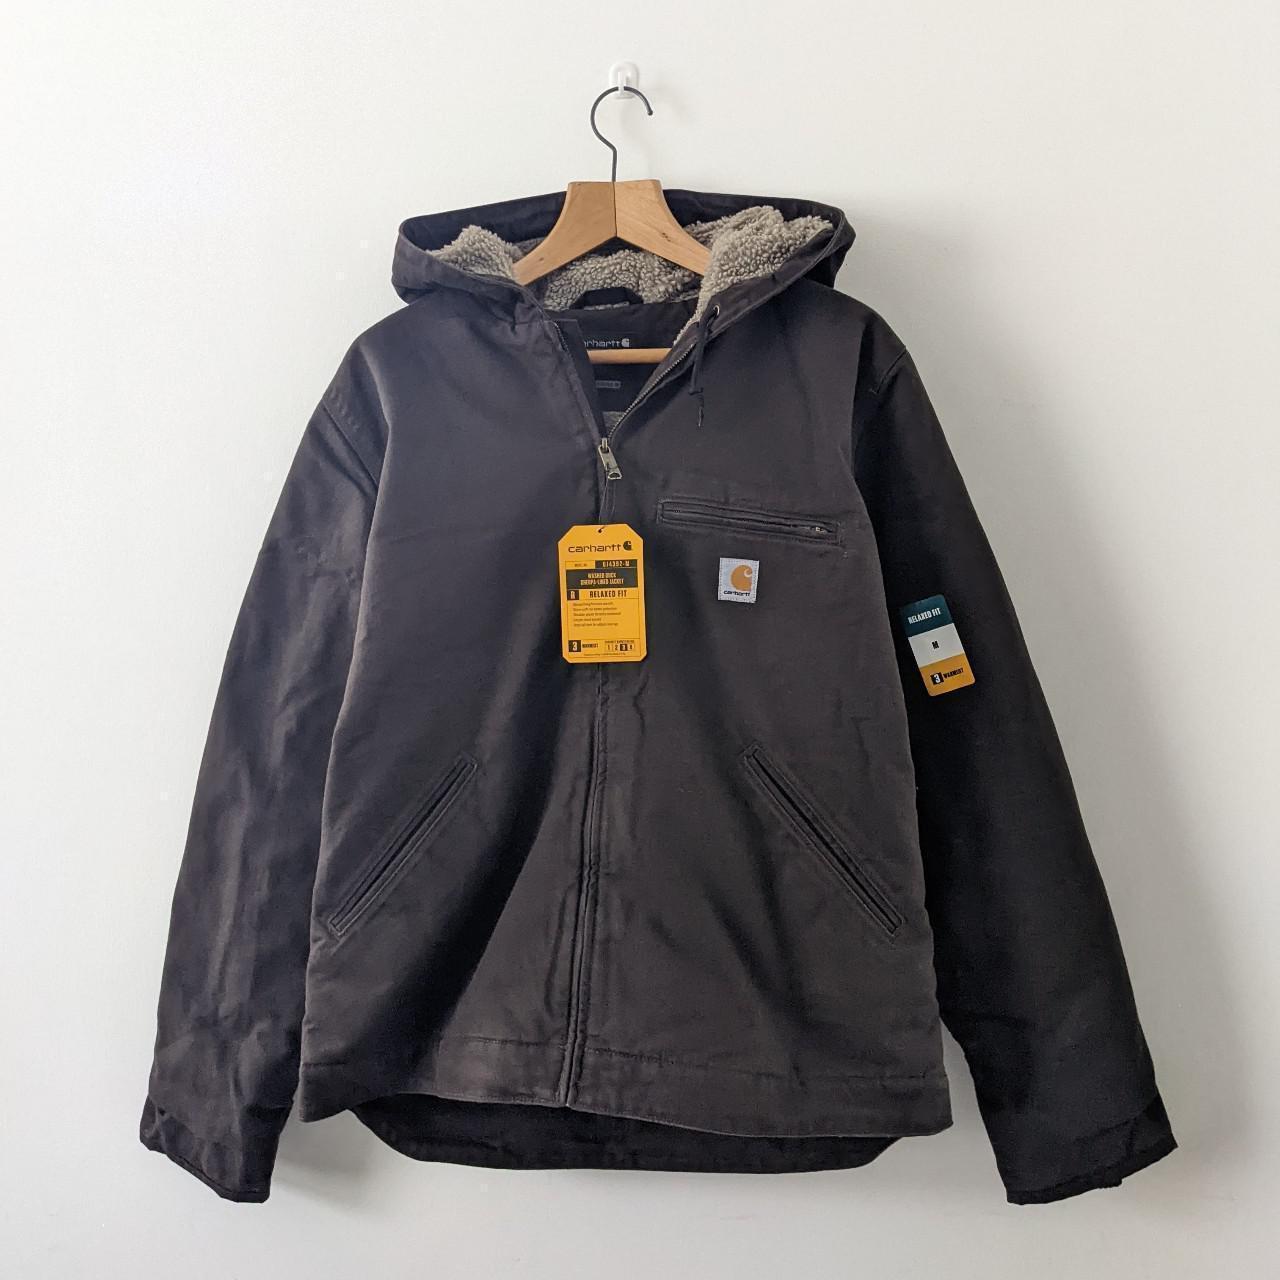 Carhartt Washed Duck Sherpa Lined Jacket - Size M &... - Depop